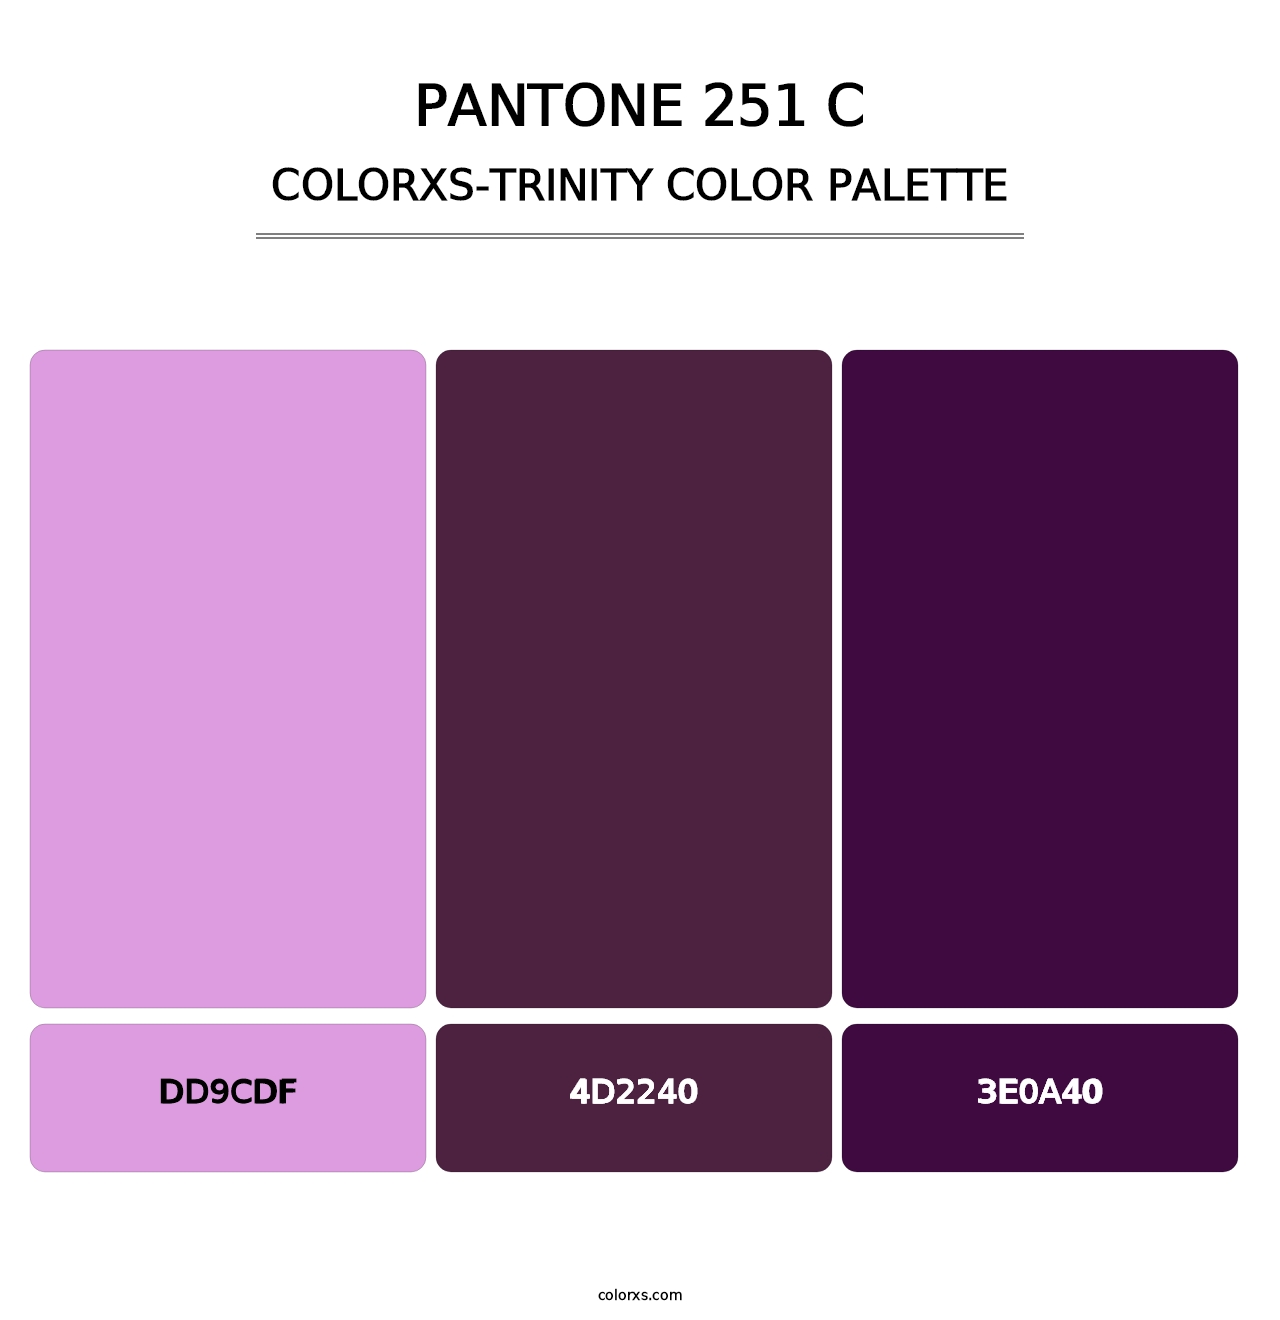 PANTONE 251 C - Colorxs Trinity Palette